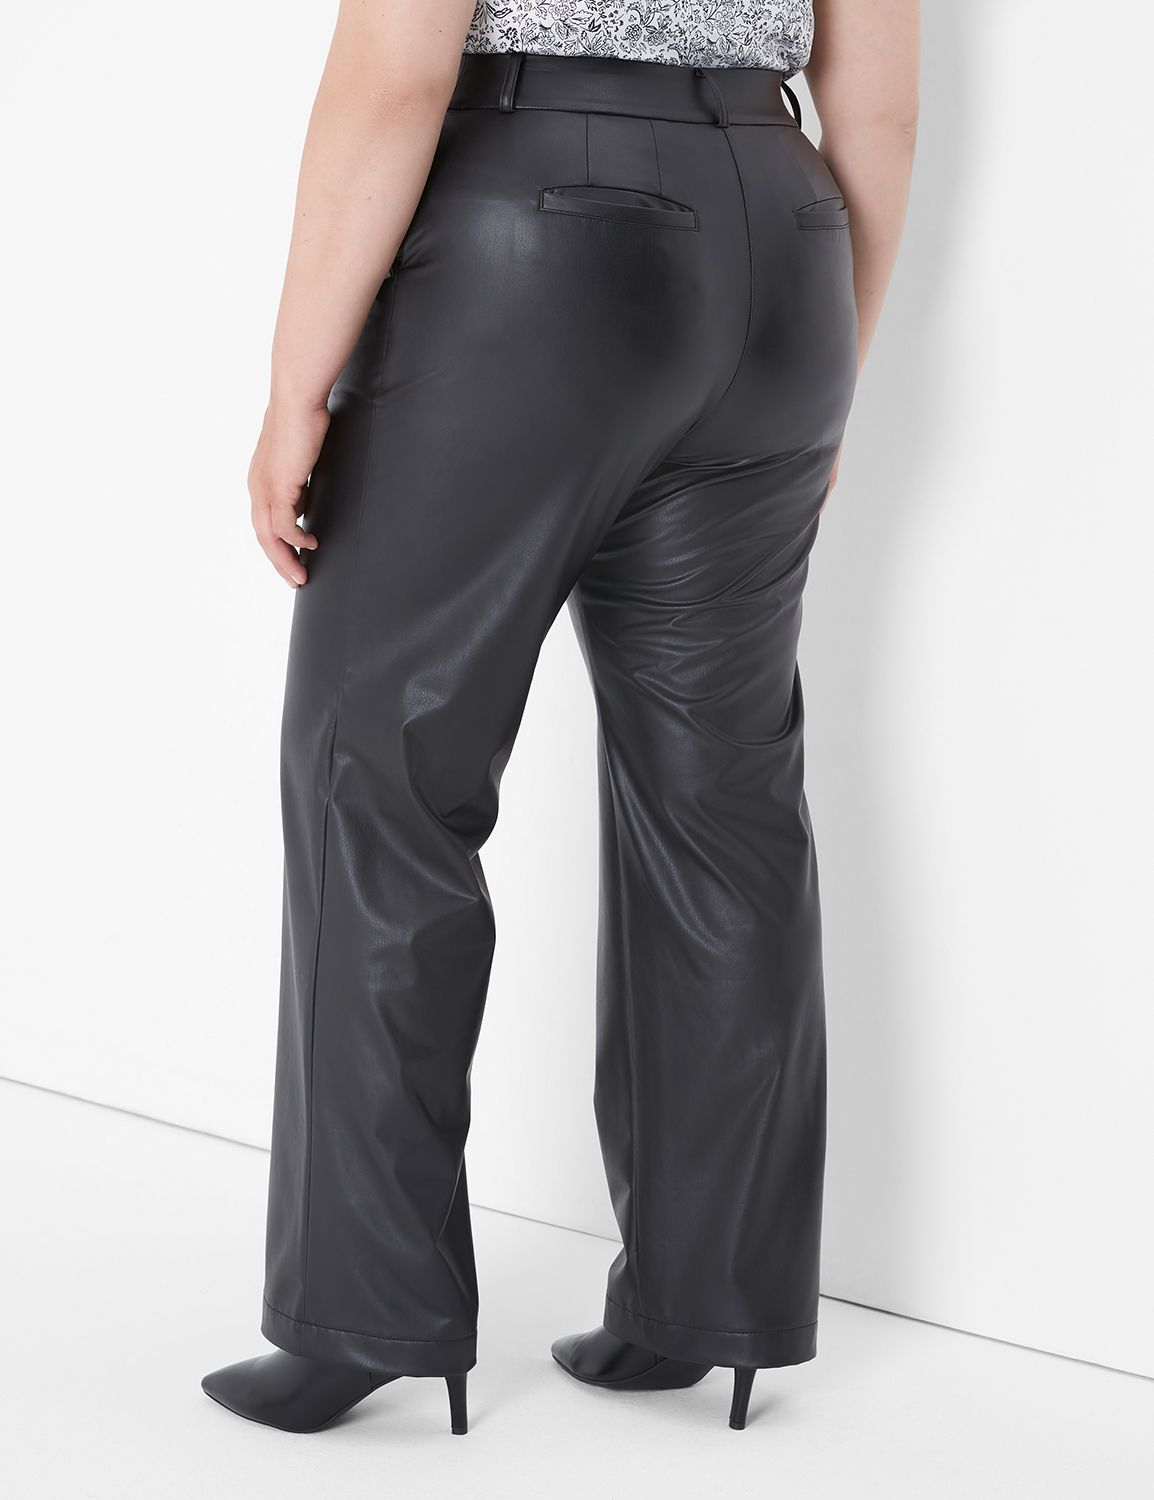 LW Women Pants Faux Leather Mid Waist Reflective Shiny Zipper Fly